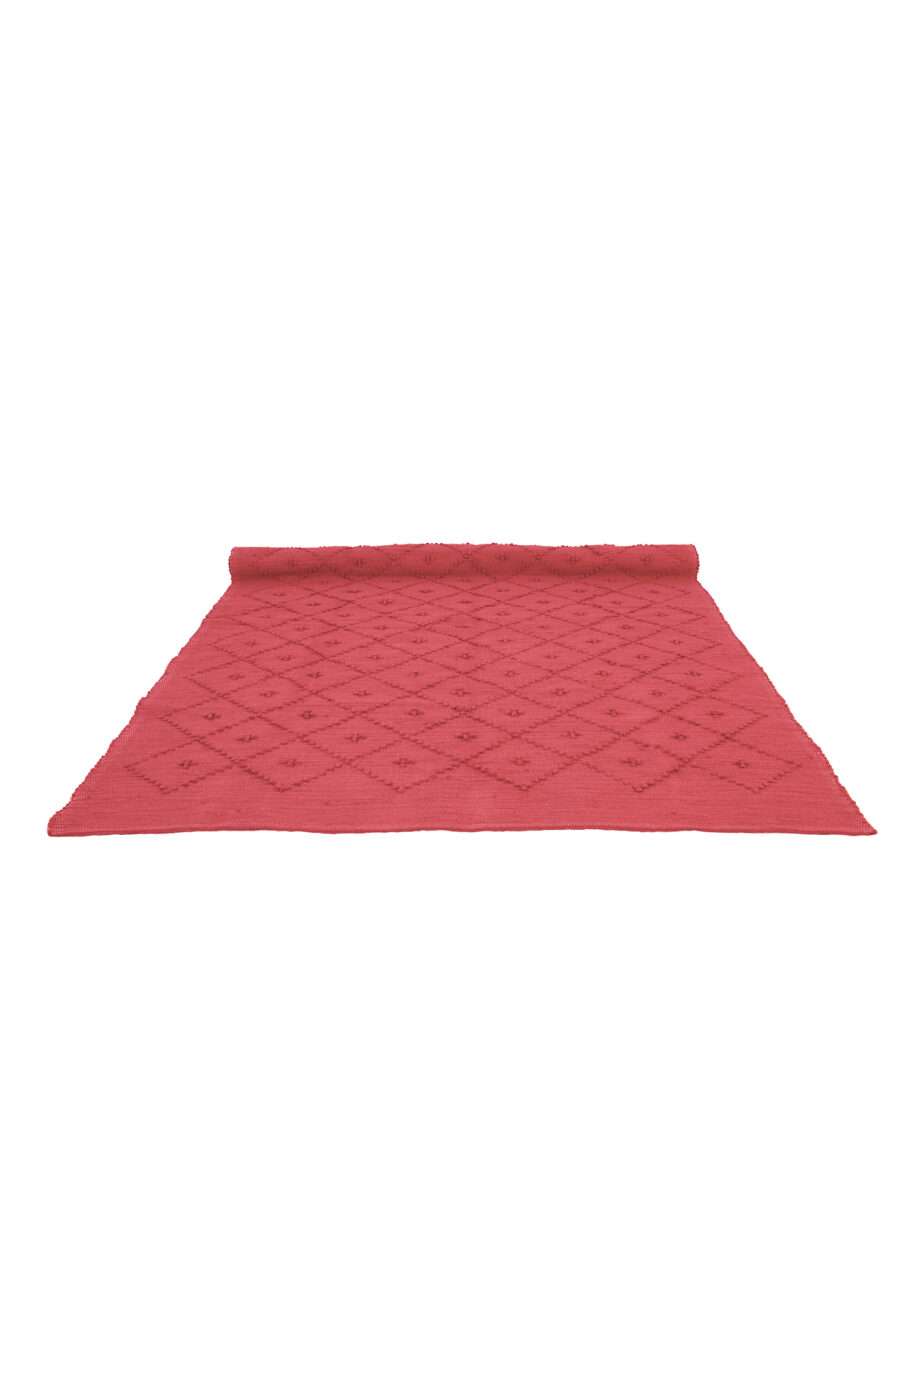 diamond red woven cotton rug xlarge